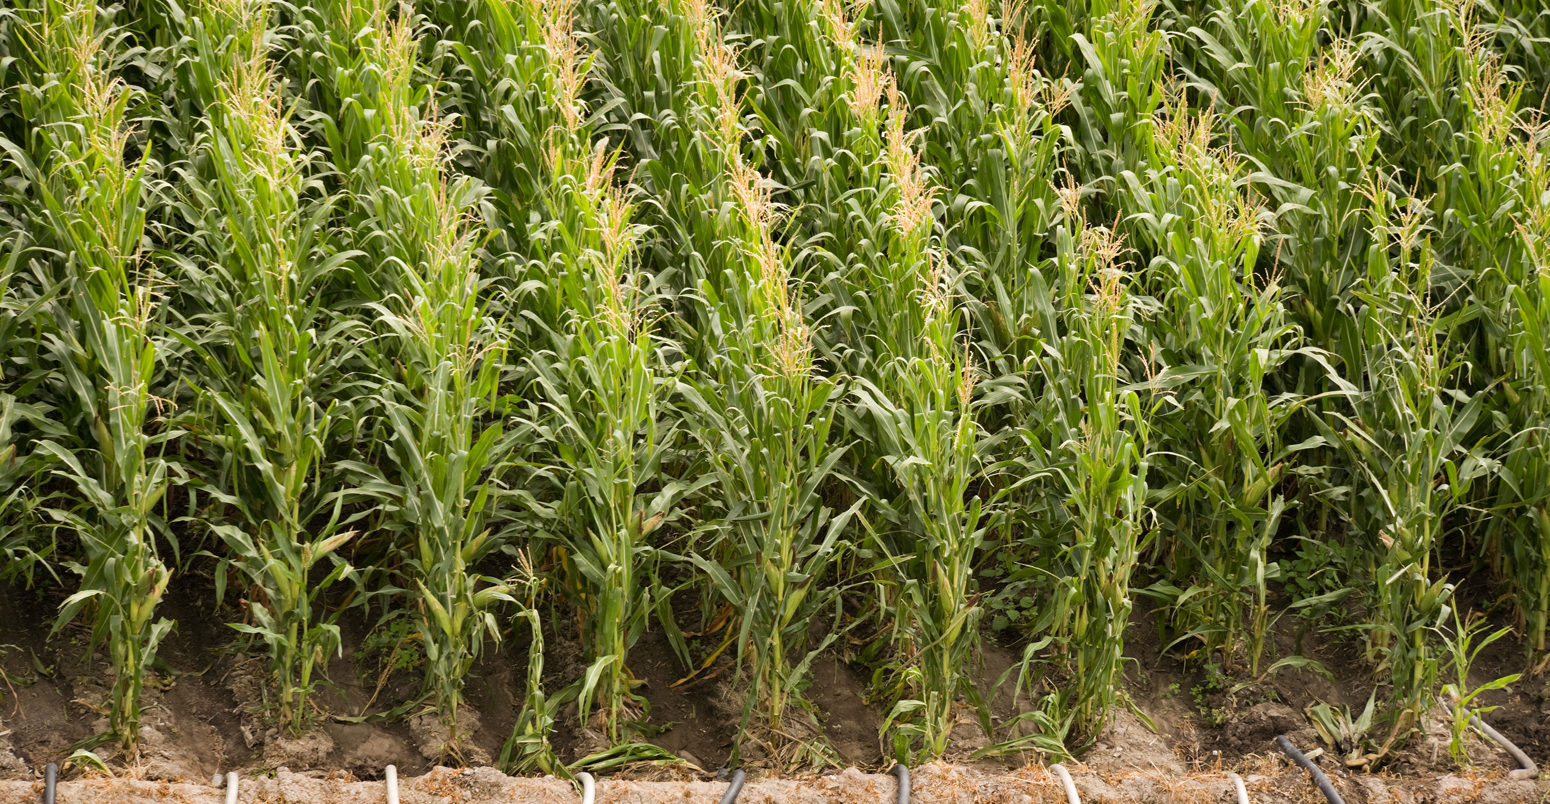 Maize field with irrigation in Nebraska, USA